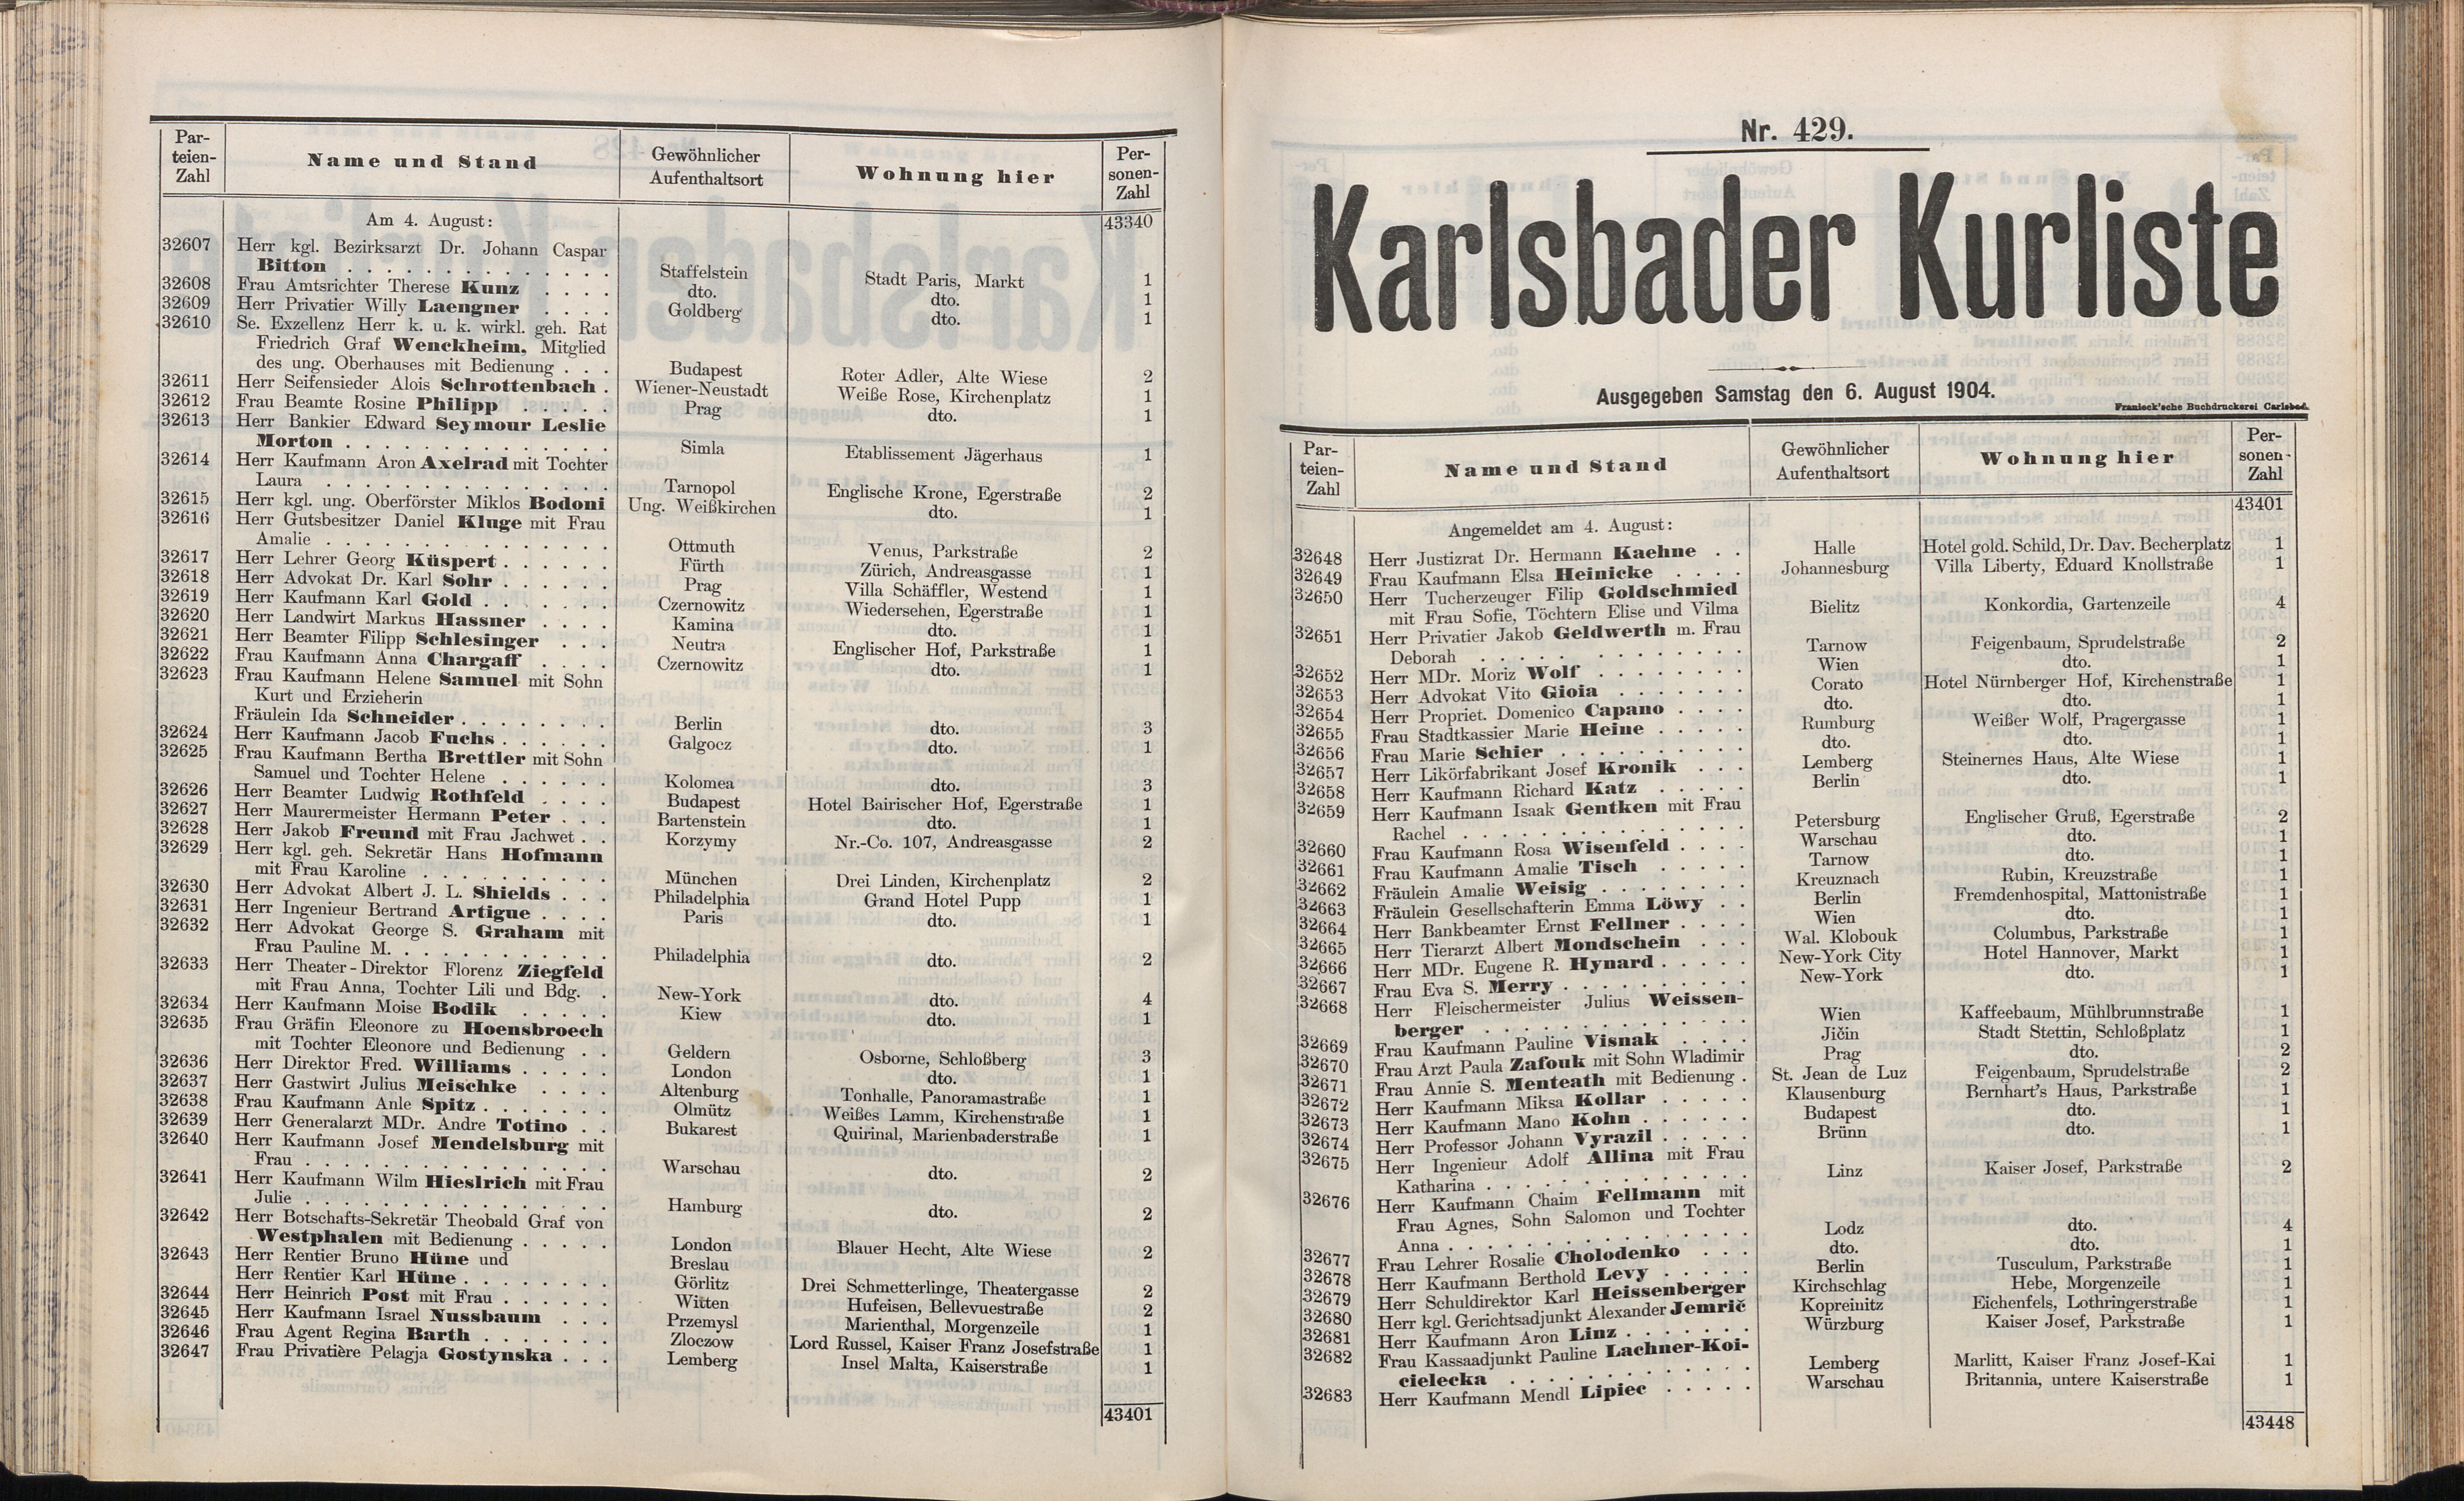 451. soap-kv_knihovna_karlsbader-kurliste-1904_4520